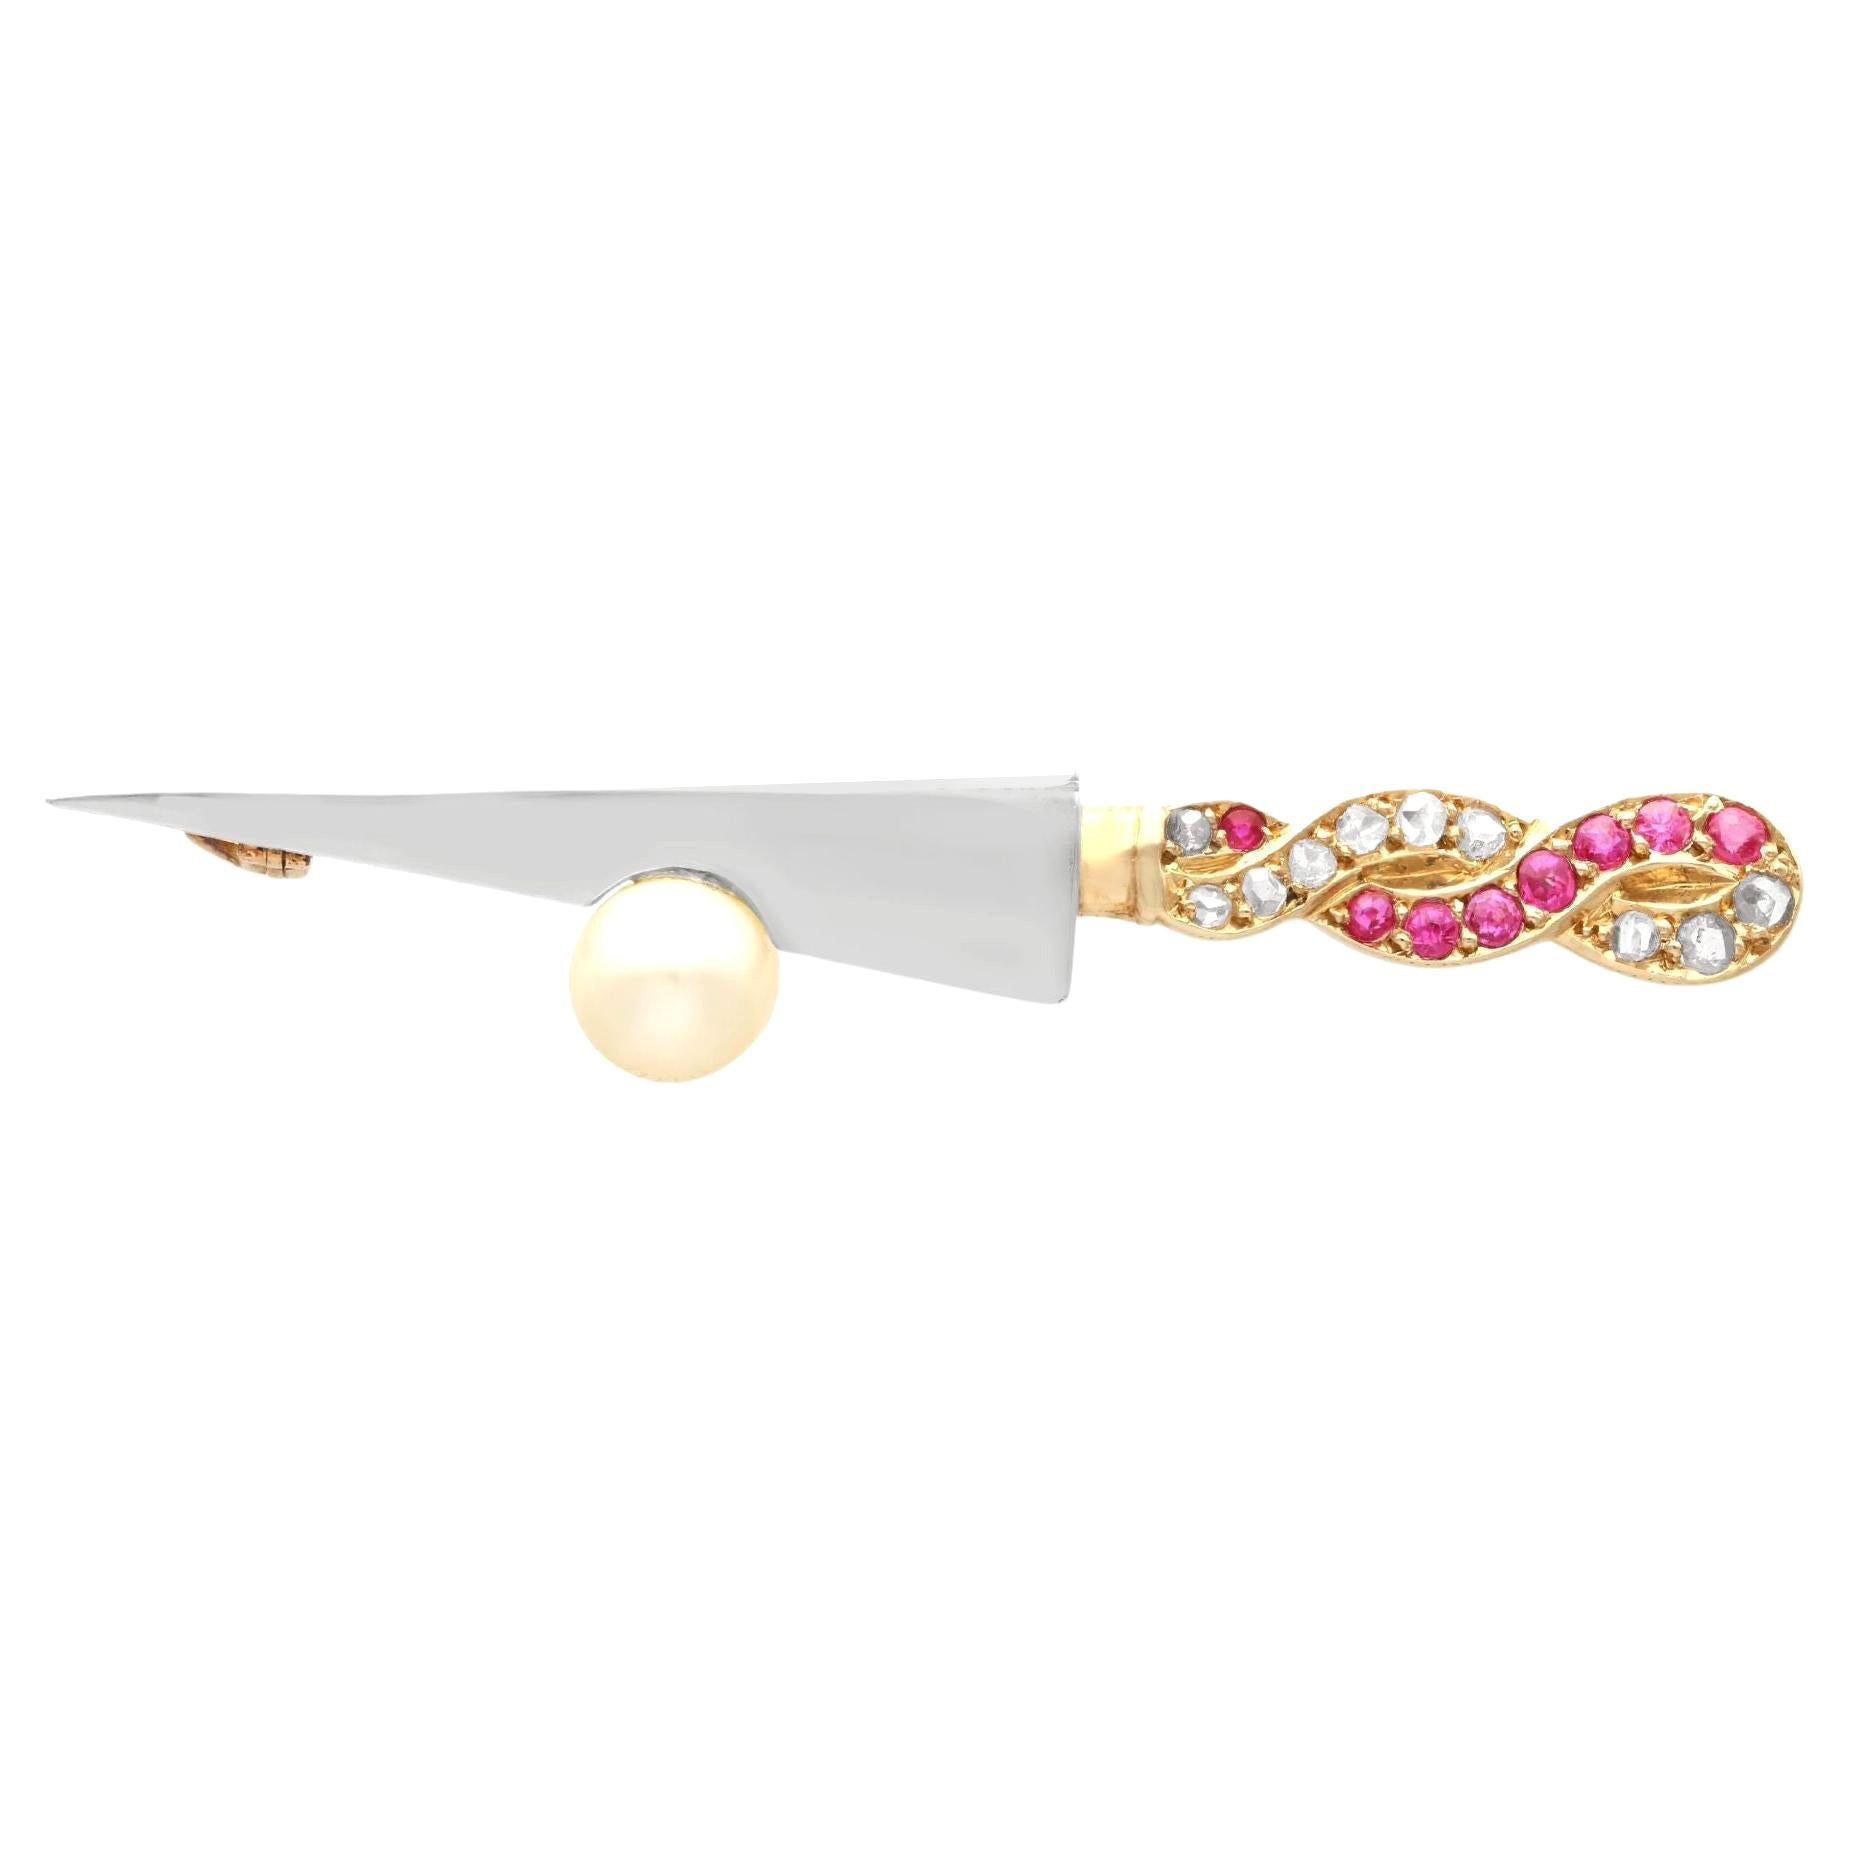 Vintage 1950s Pearl Ruby and Diamond and Yellow Gold Sword Brooch (Broche épée en or jaune avec perles, rubis et diamants)